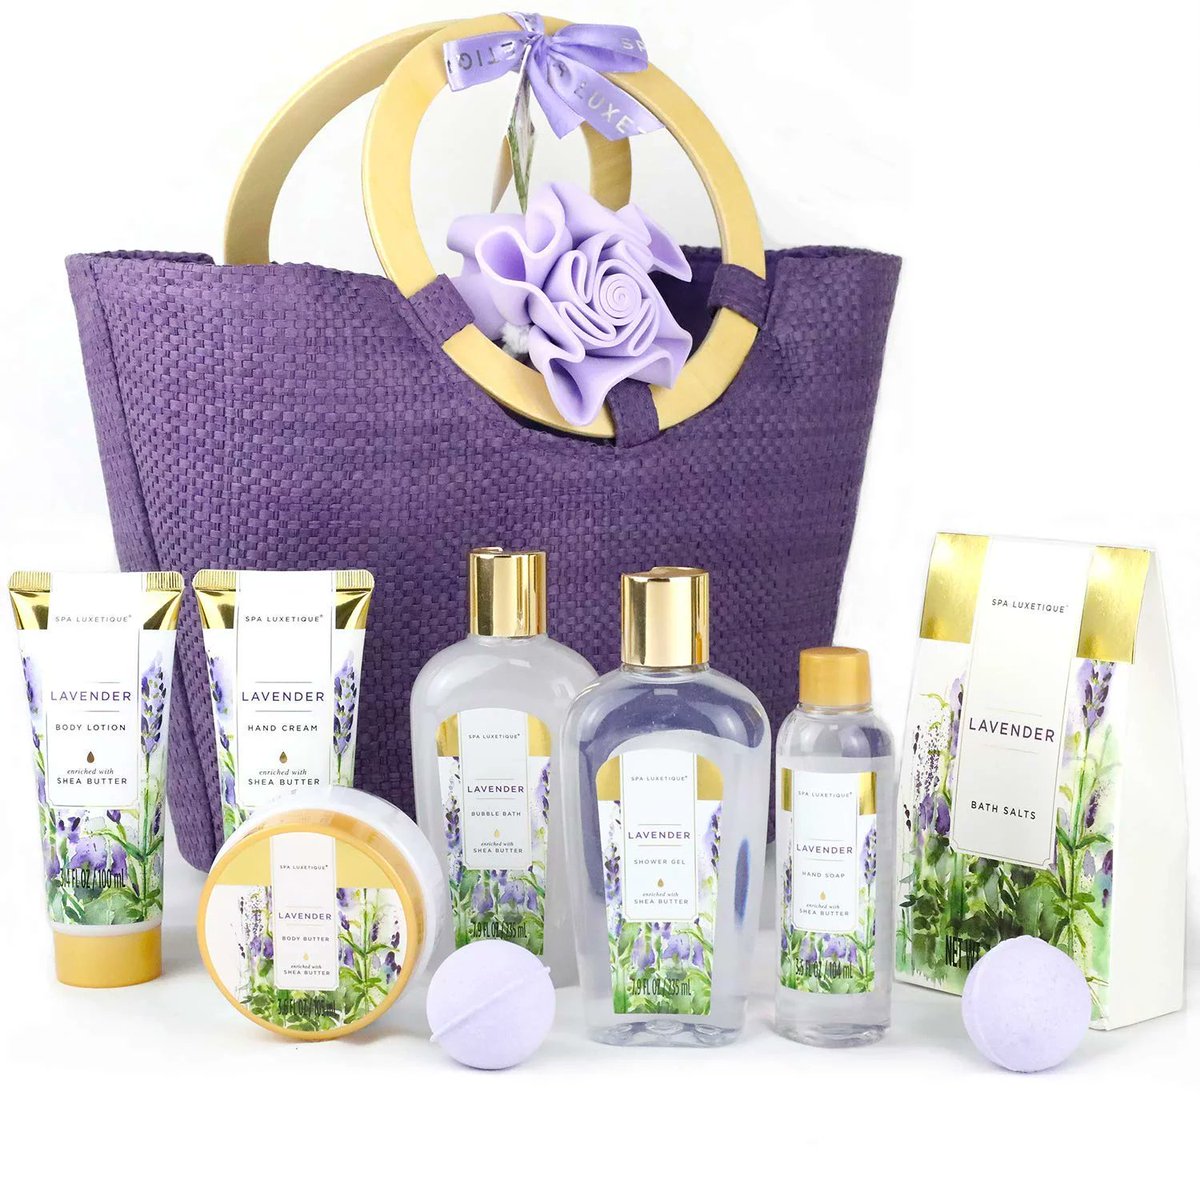 Spa Luxetique Bath Gift Sets for Women Lavender Body Care Baskets -- Save $38 -- JUST $27.99 goto.walmart.com/c/2522200/5657… #bathgiftset #bathgiftsets #bathgiftsetdeals #bathgiftsetdeal #giftset #giftsets #giftsetdeals #giftsetdeal #spacareset #spacaresets #spadeals #spadeal #deals